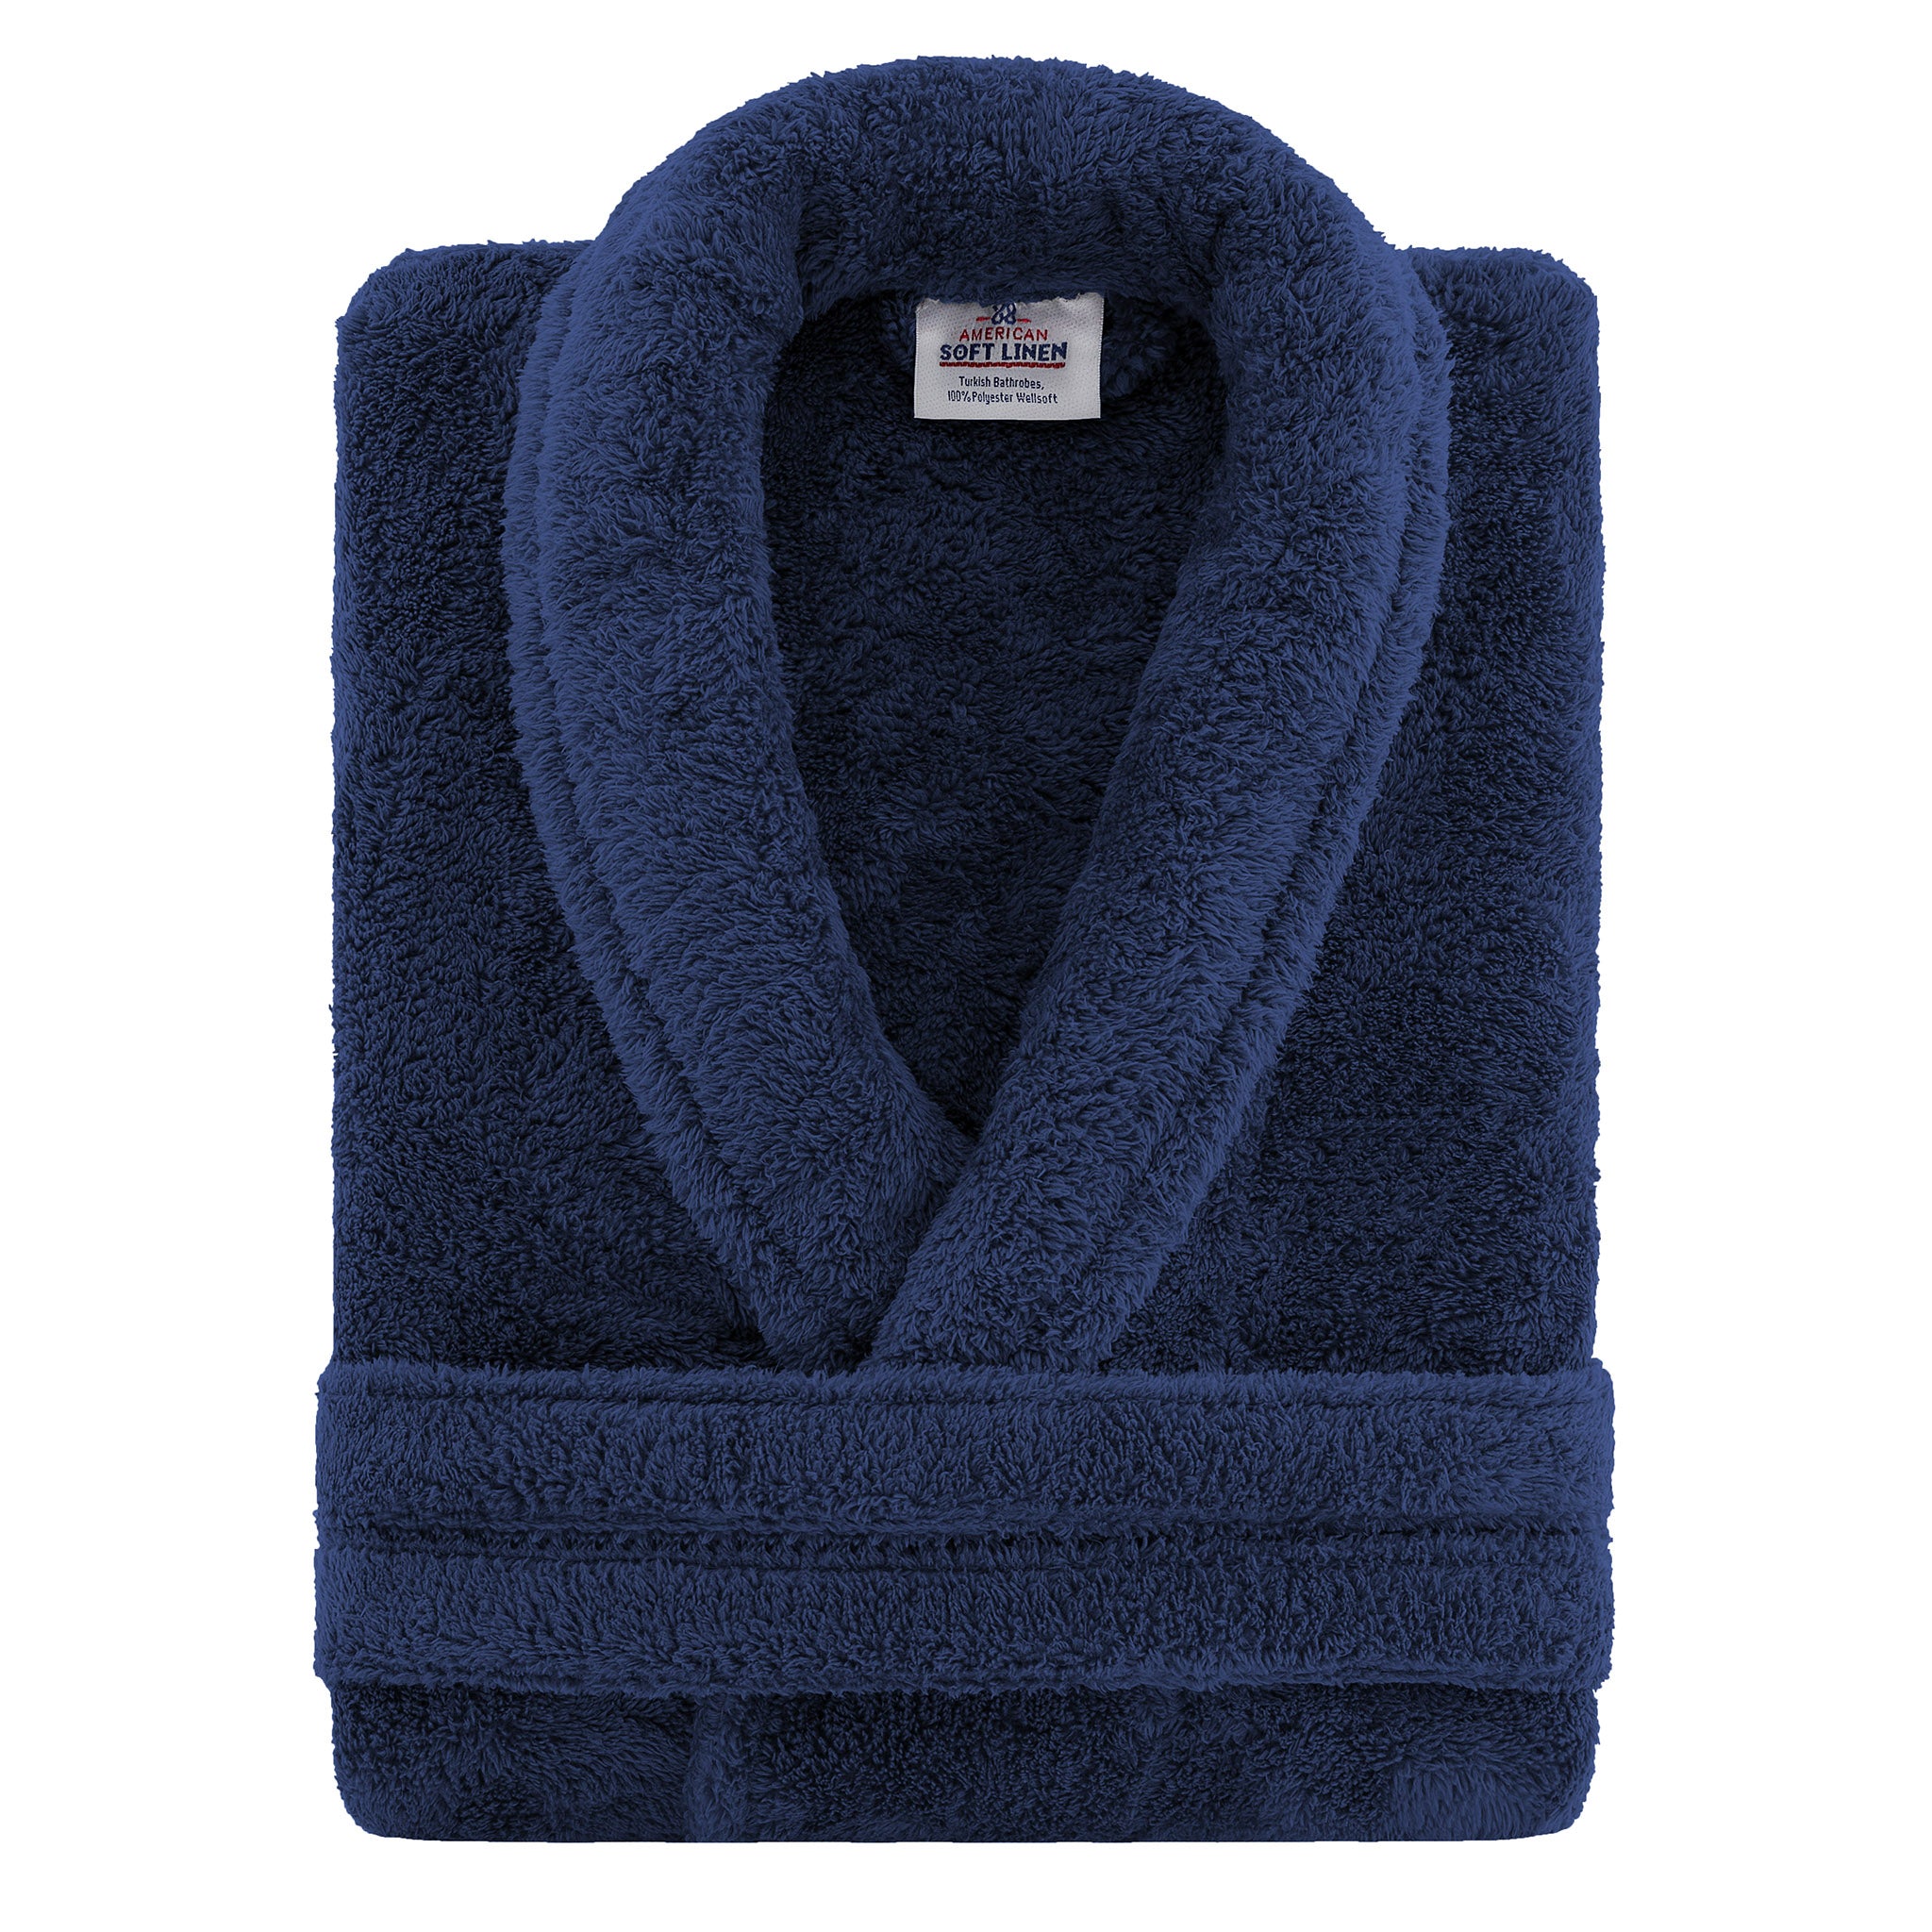 American Soft Linen Super Soft Absorbent and Fluffy Unisex Fleece Bathrobe -12 Set Case Pack -S-M-navy-blue-3